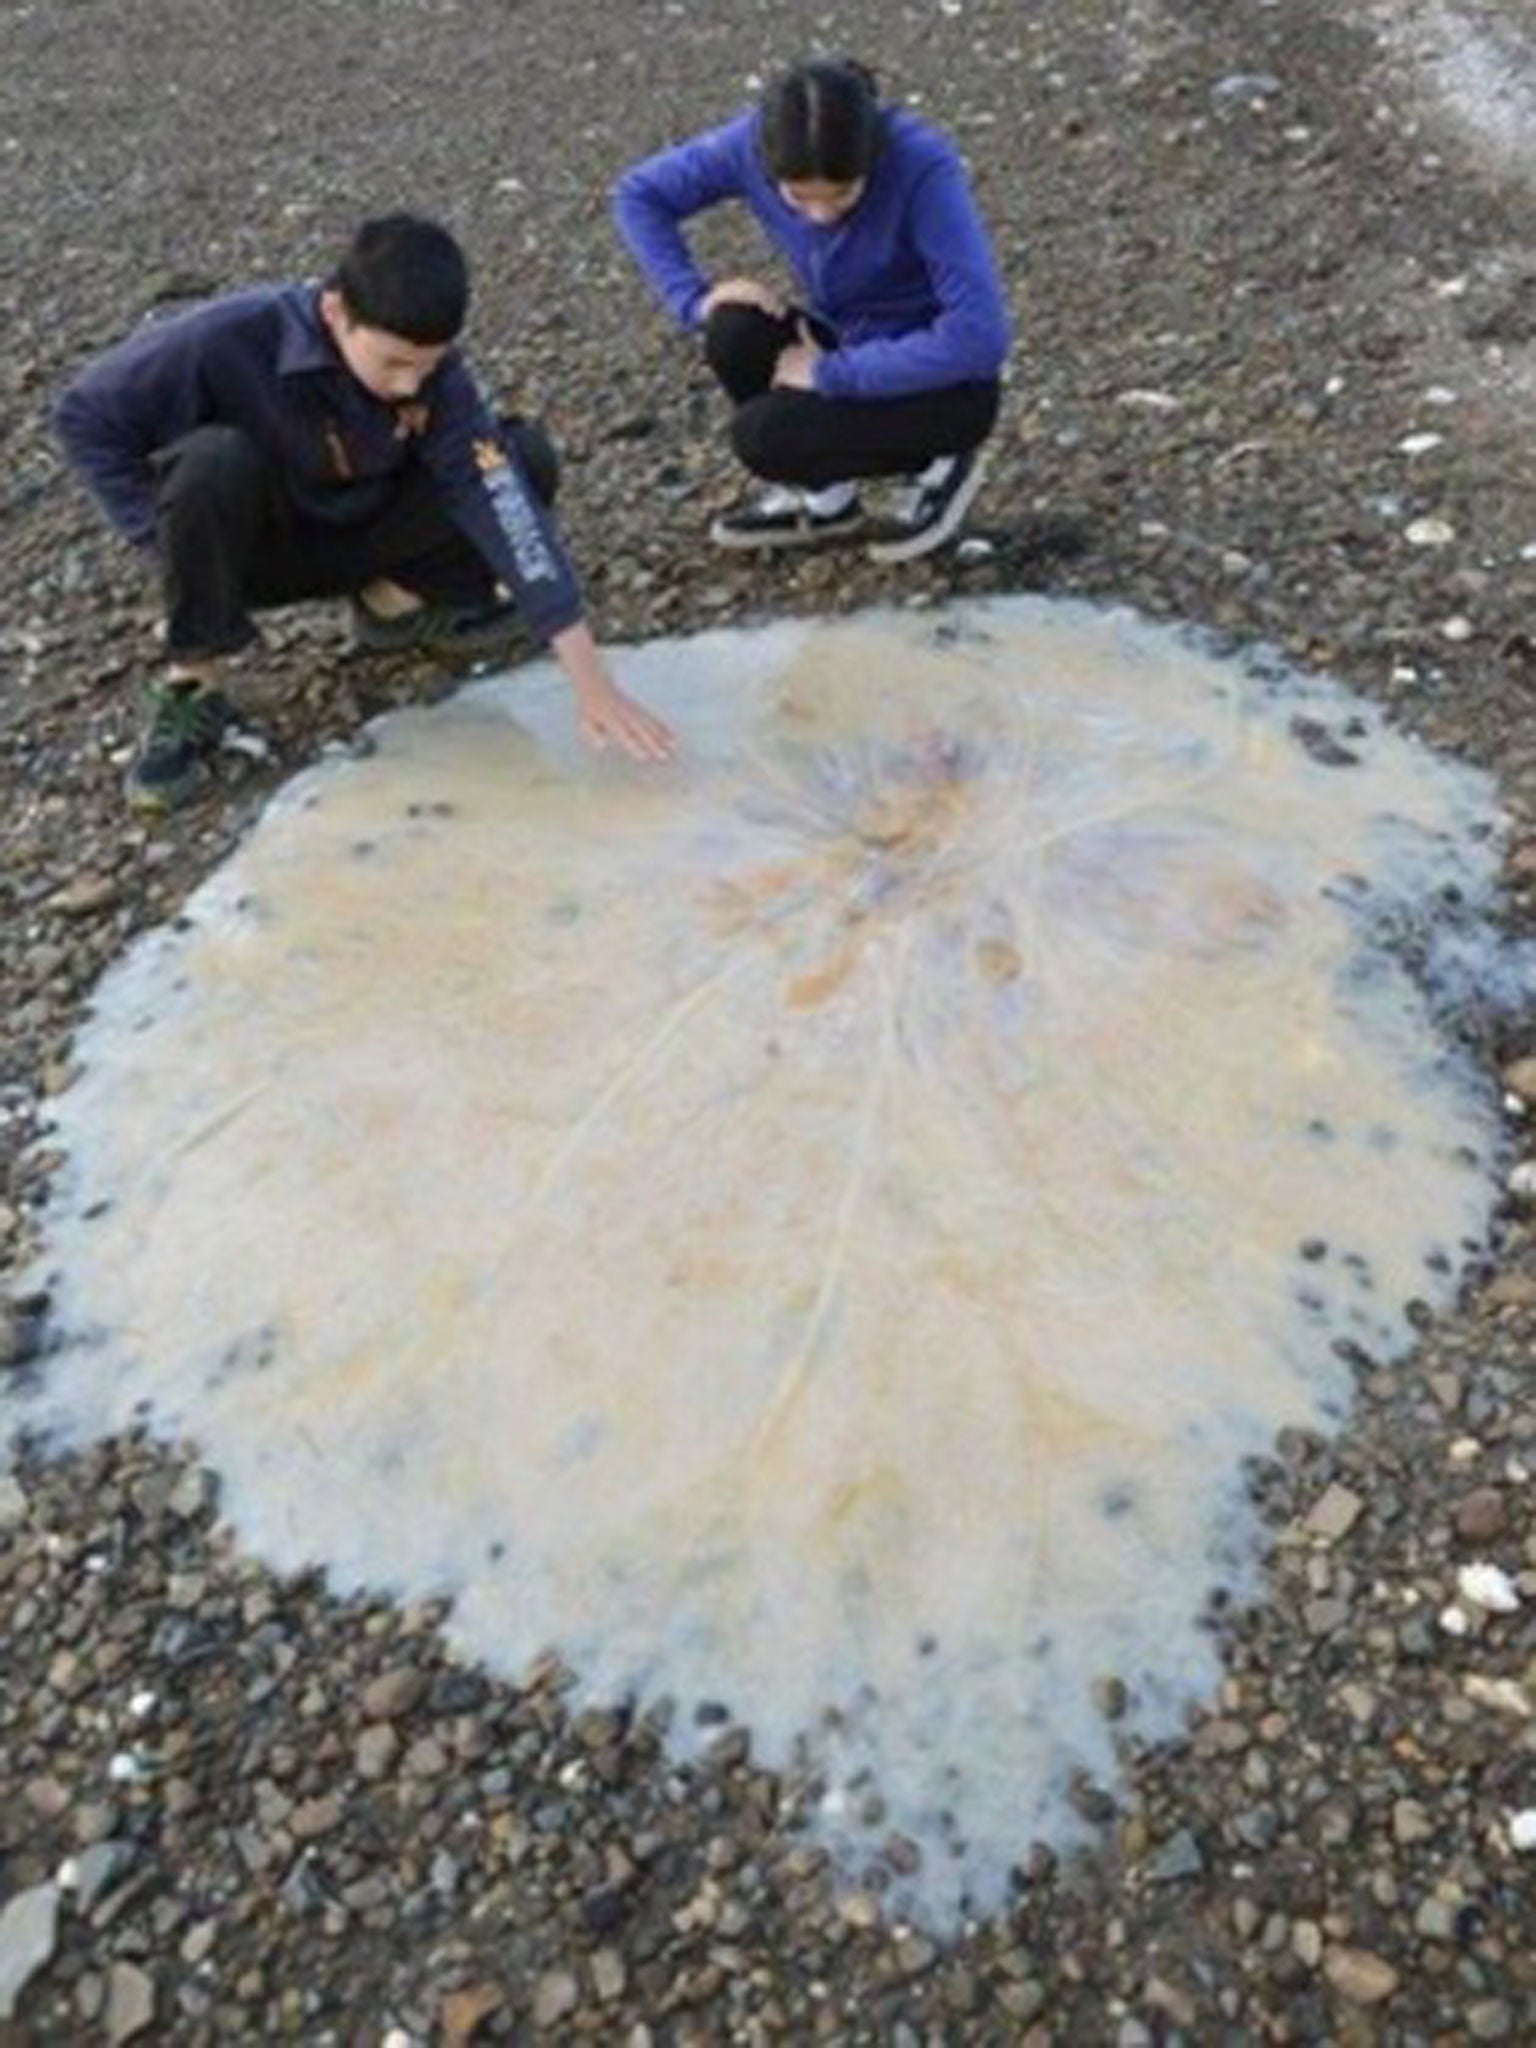 This 1.5 metre jellyfish washed up in Tasmania 